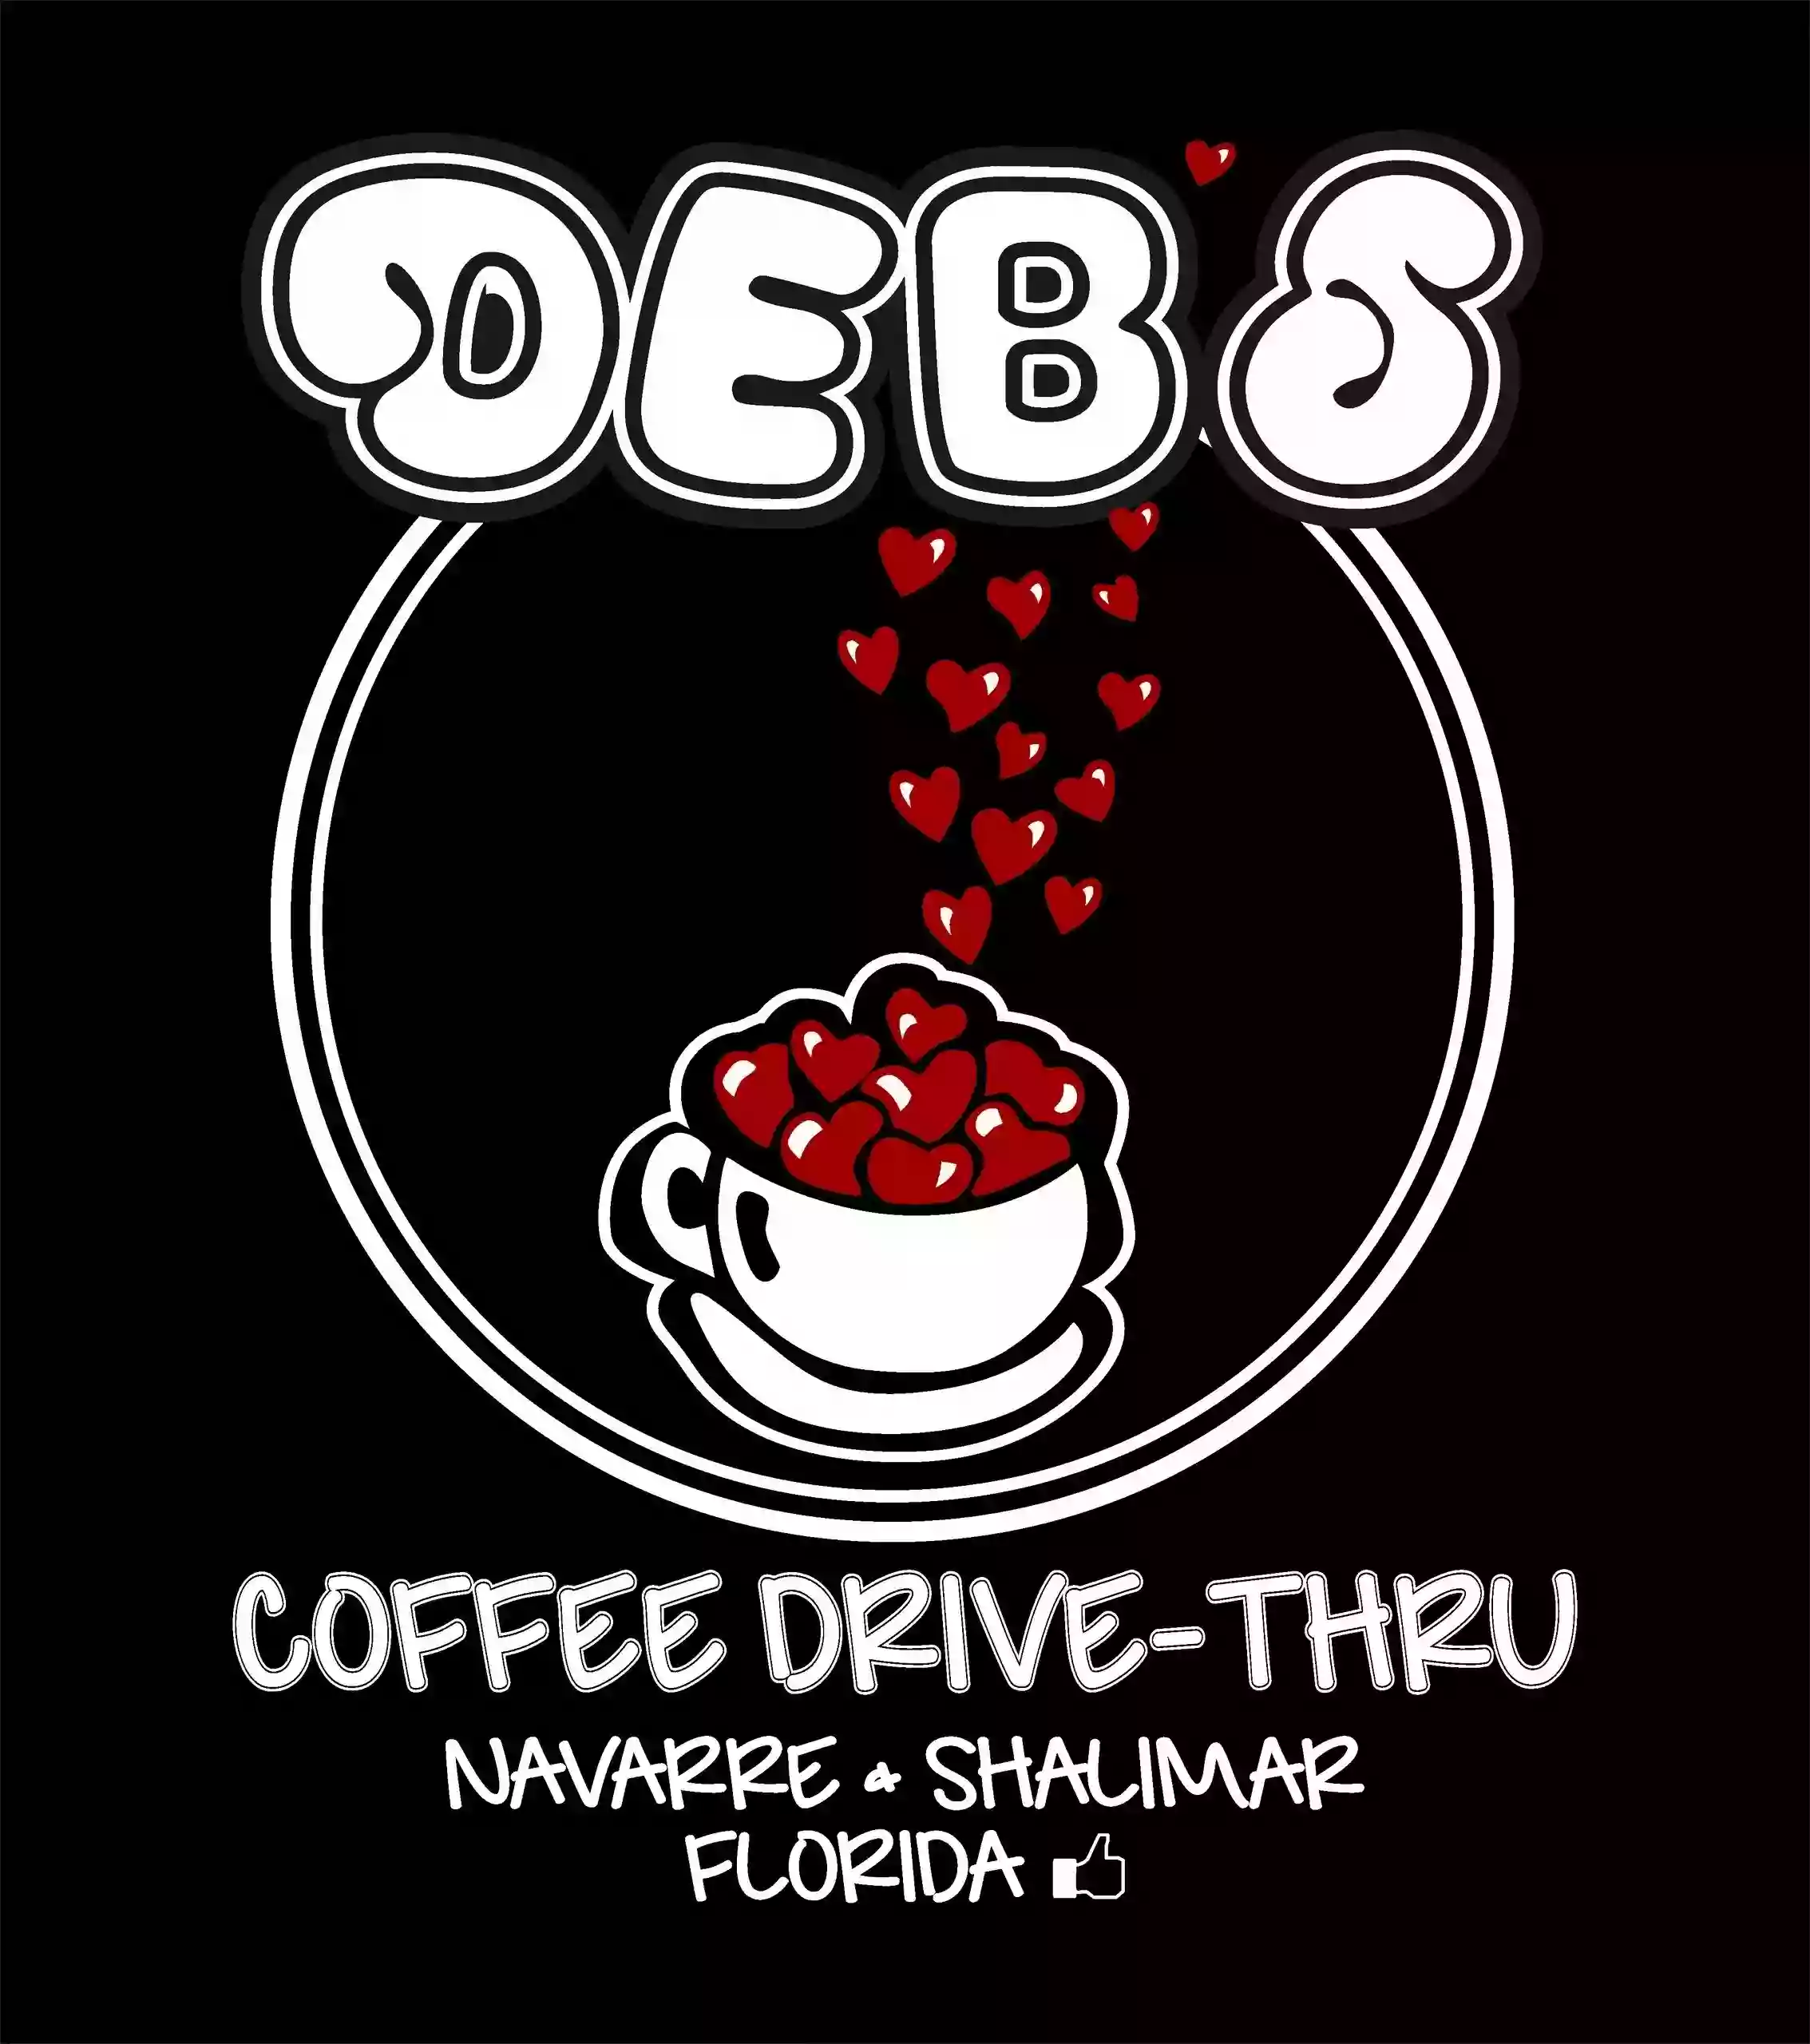 Deb's Coffee Drive-Thru